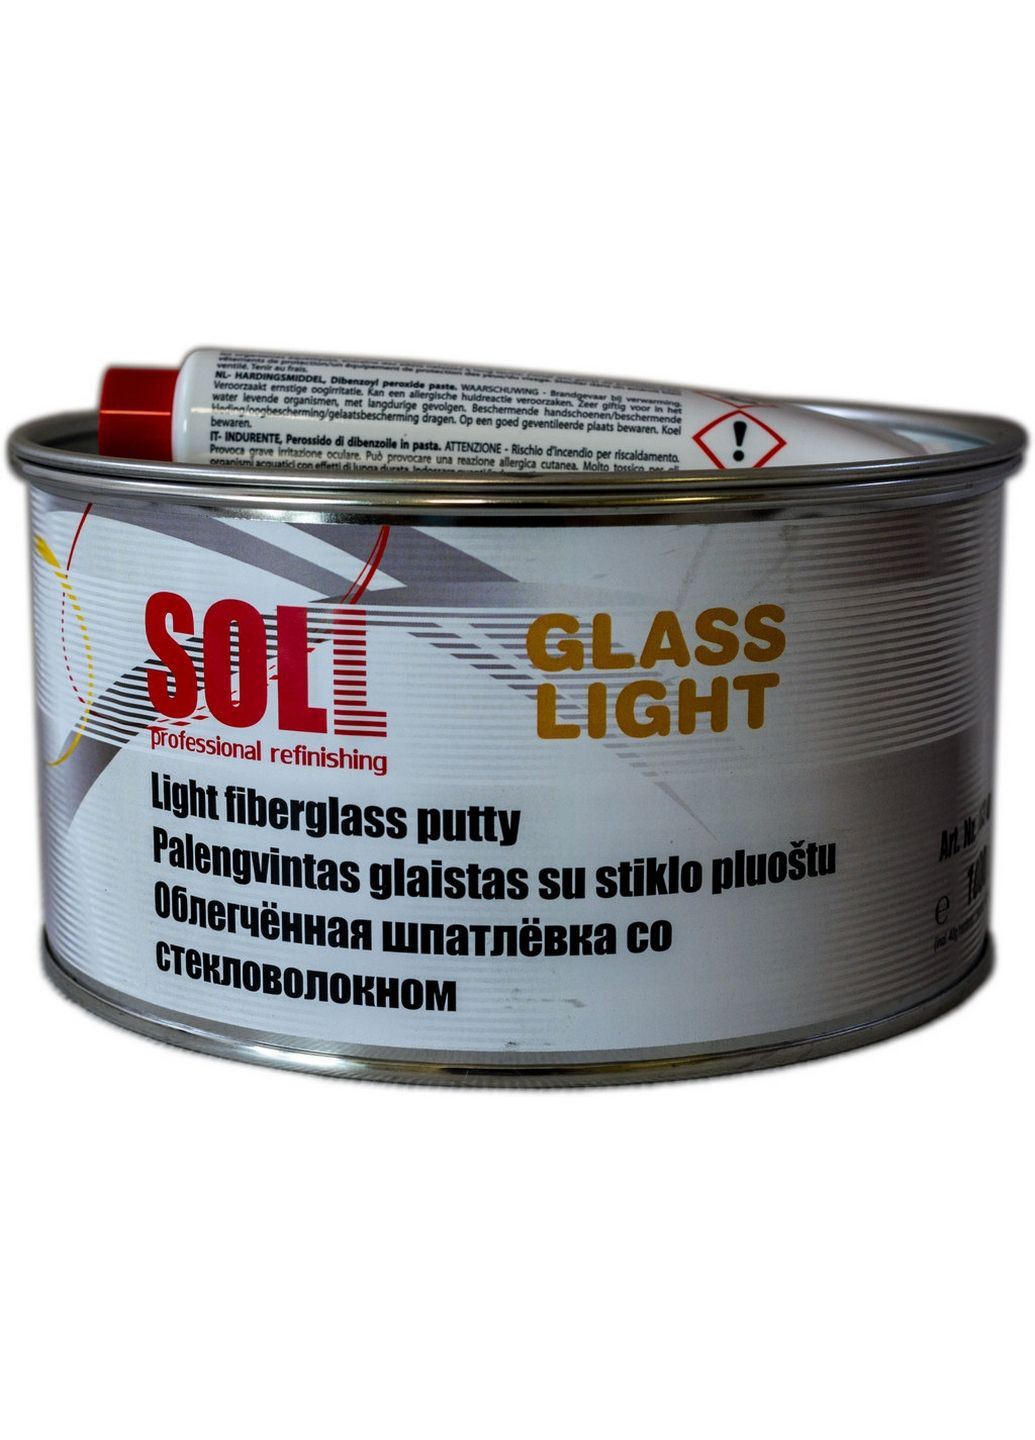 Шпаклевка со стекловолокном 1.0 кг glass light No Brand (282583663)